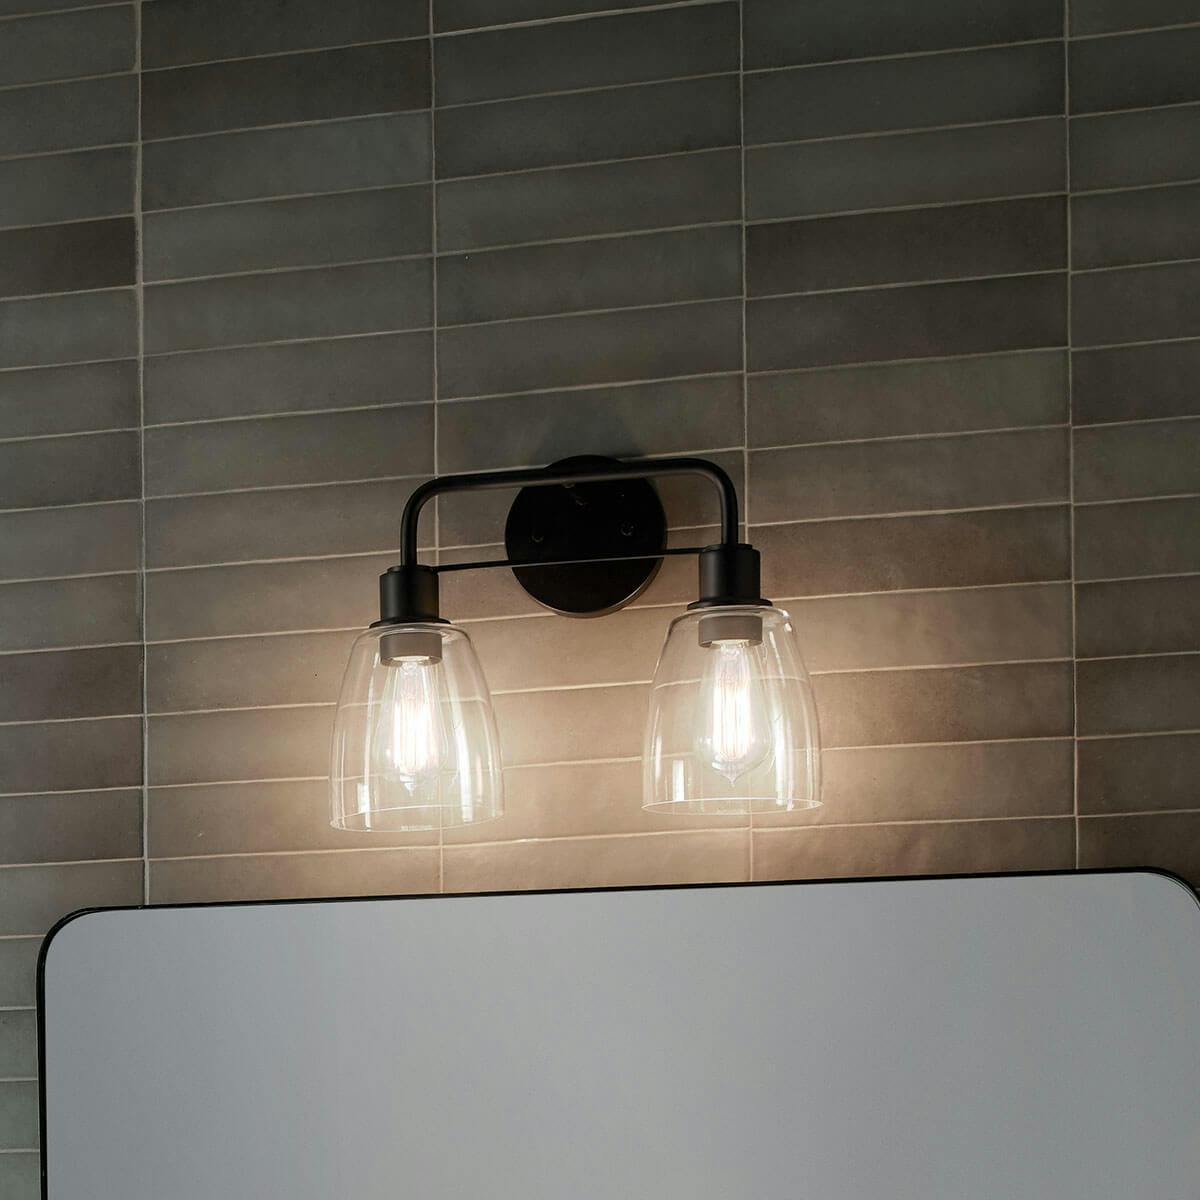 Day time Bathroom featuring Meller vanity light 55101BK